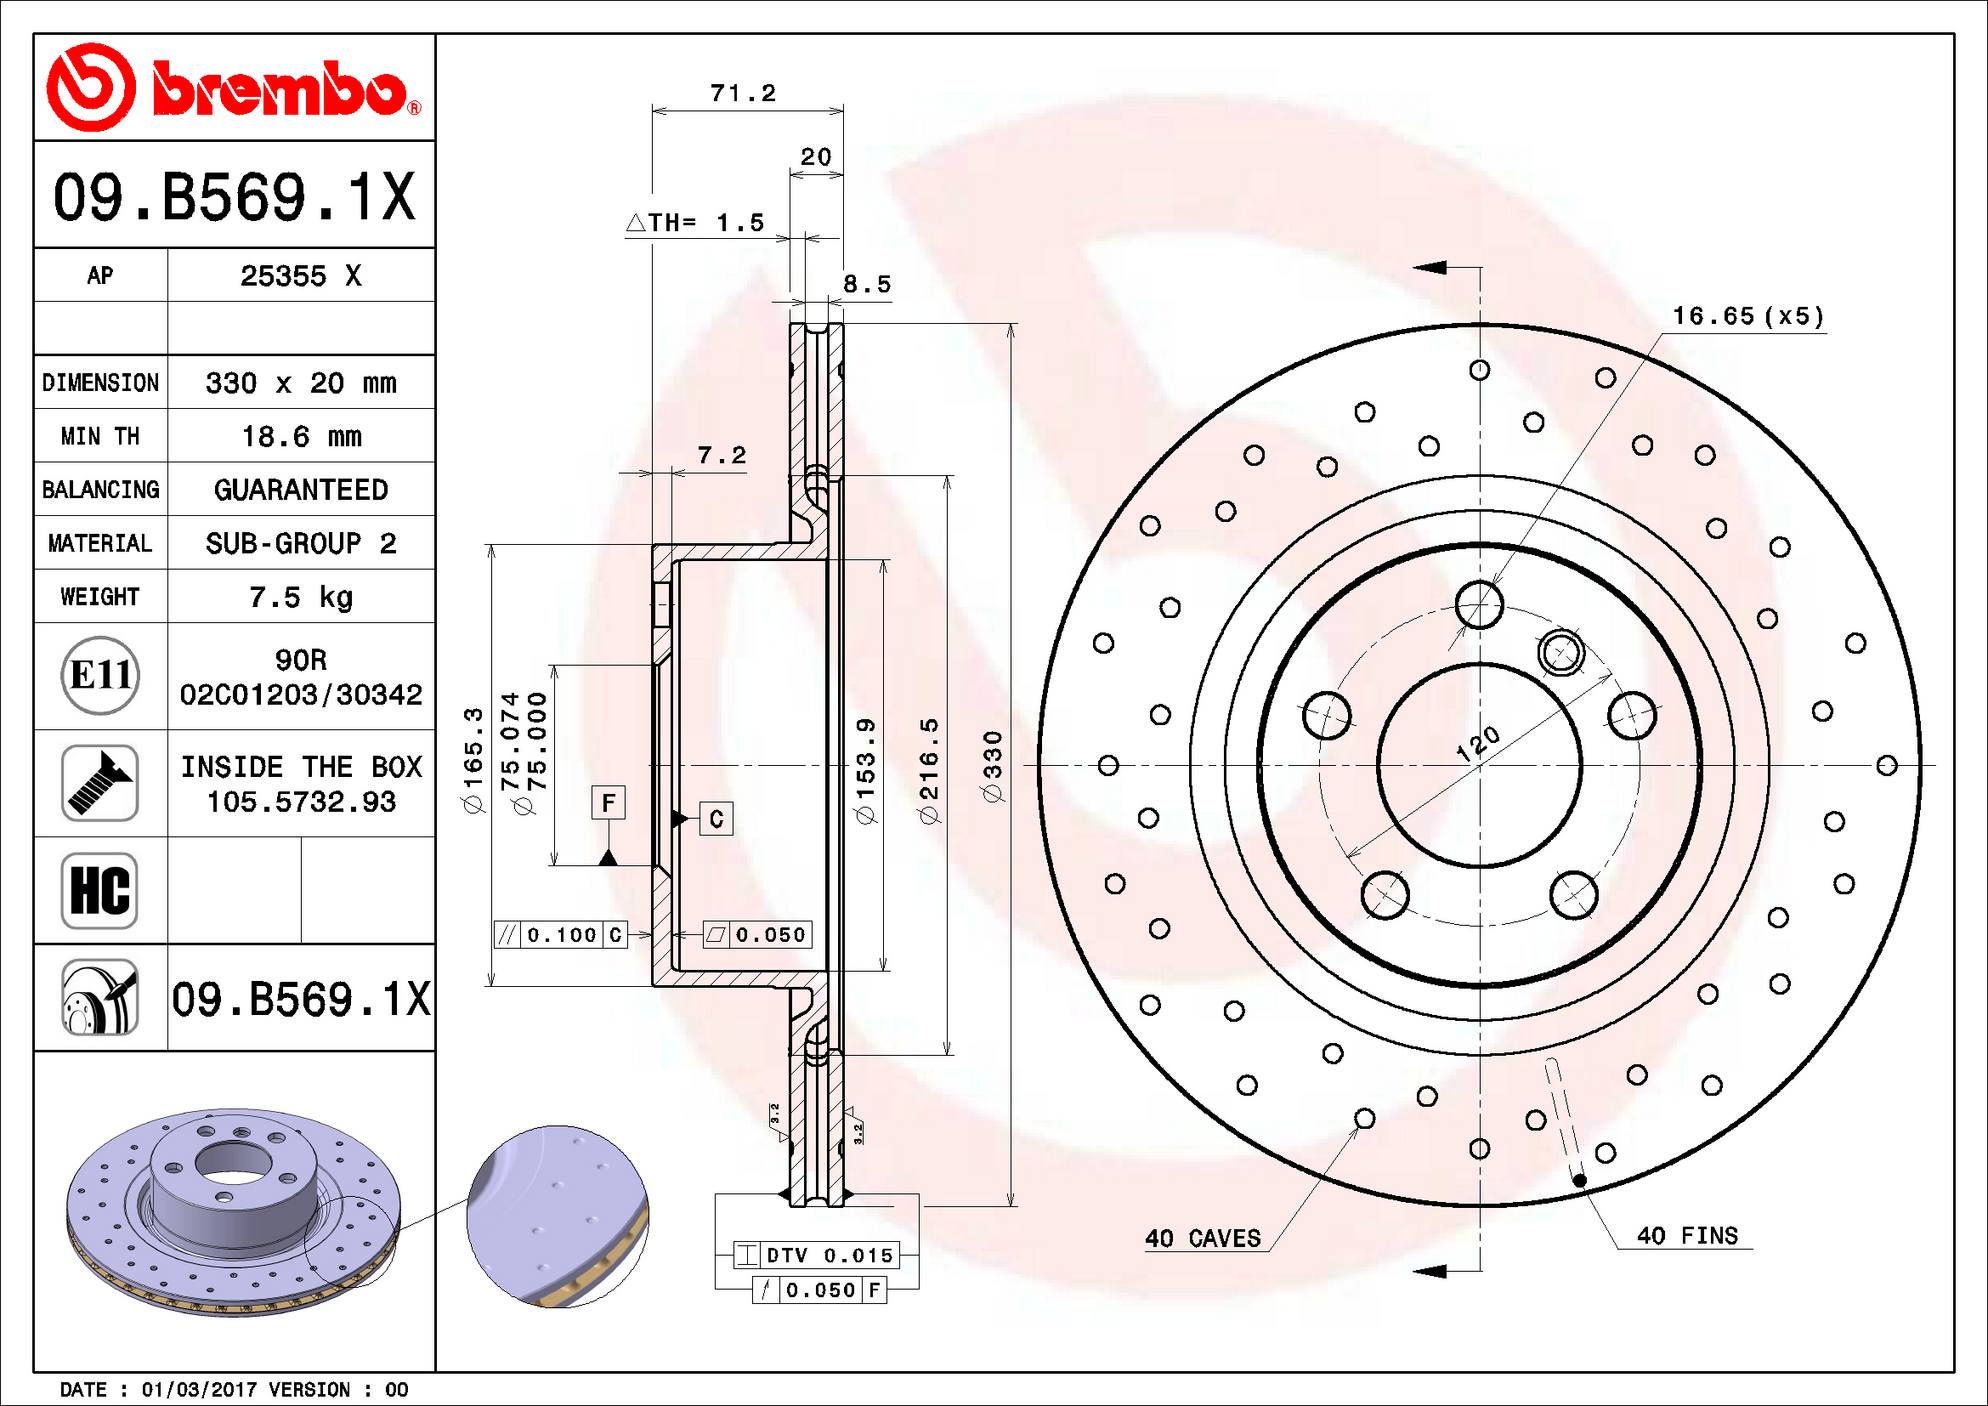 BMW Disc Brake Pad and Rotor Kit - Rear (330mm) (Ceramic) (Xtra) Brembo